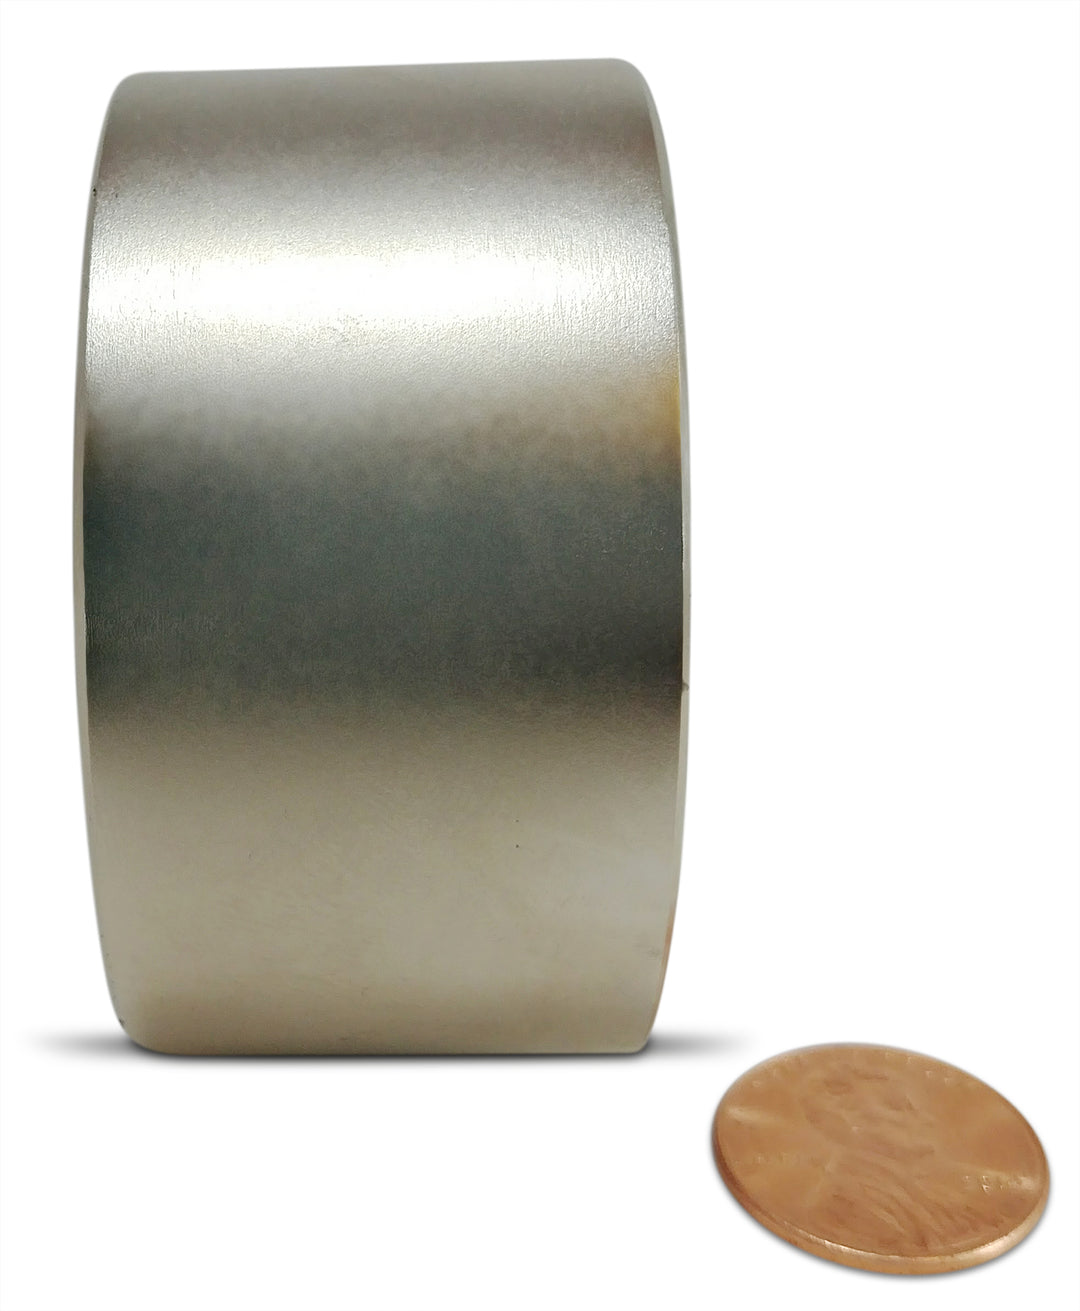 Brute Magnetics 60mm x 30mm Round Neodymium Disc Magnet - 250lb pul, Penny Size Comparison